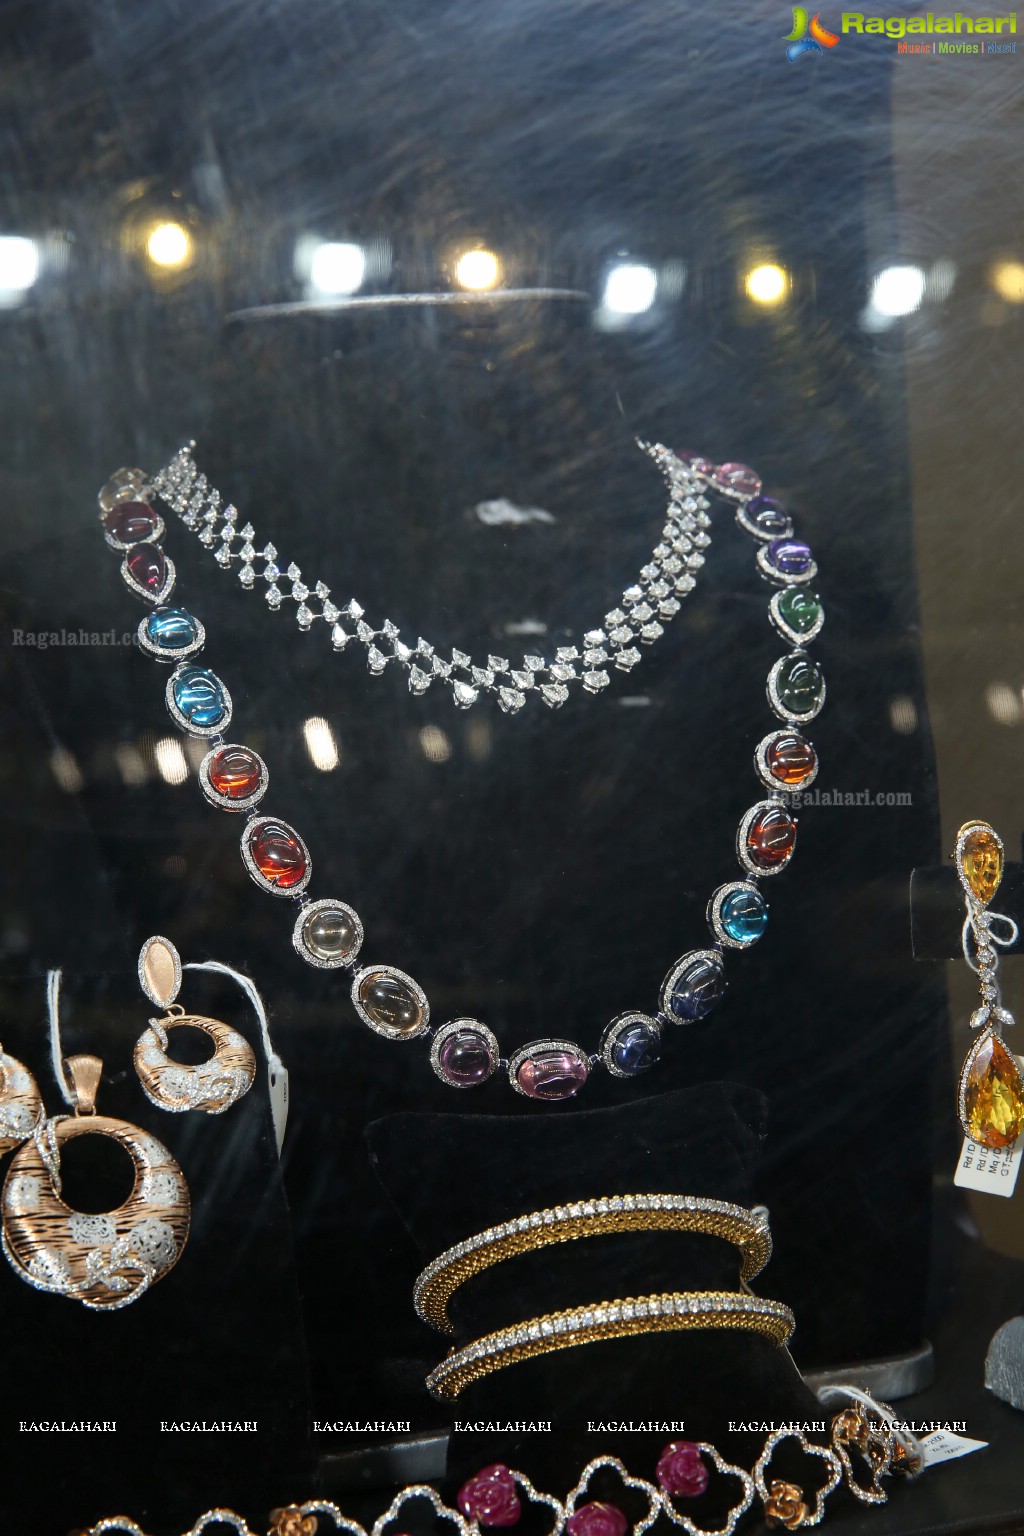 Grand Launch of Diva Galleria - Exotic Jewellery Exhibition at Park Hyatt